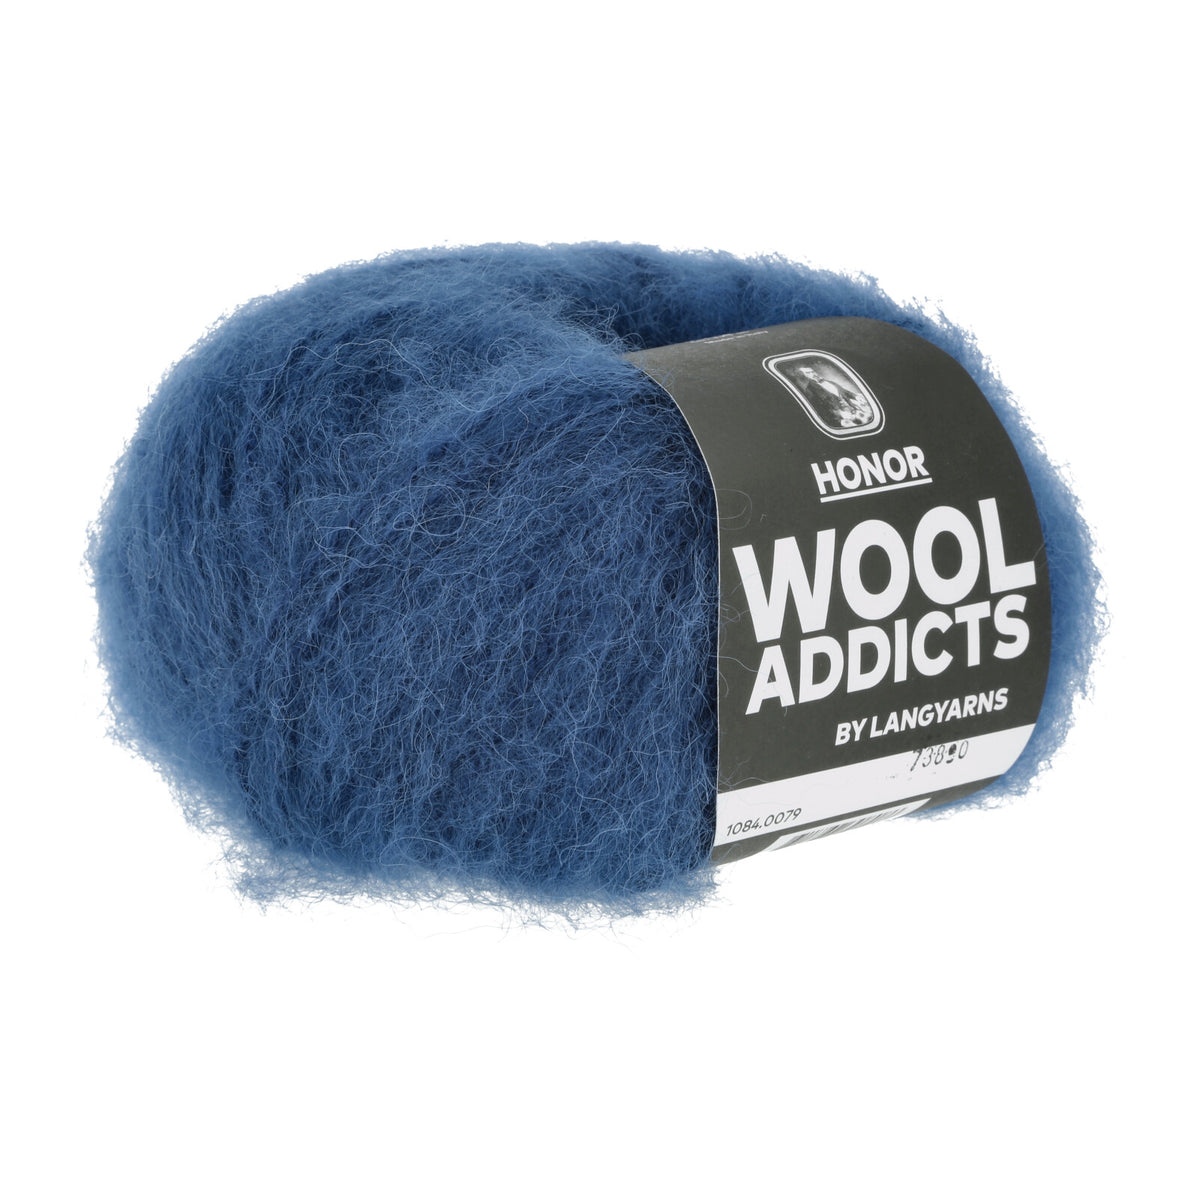 Wool Addicts Honor